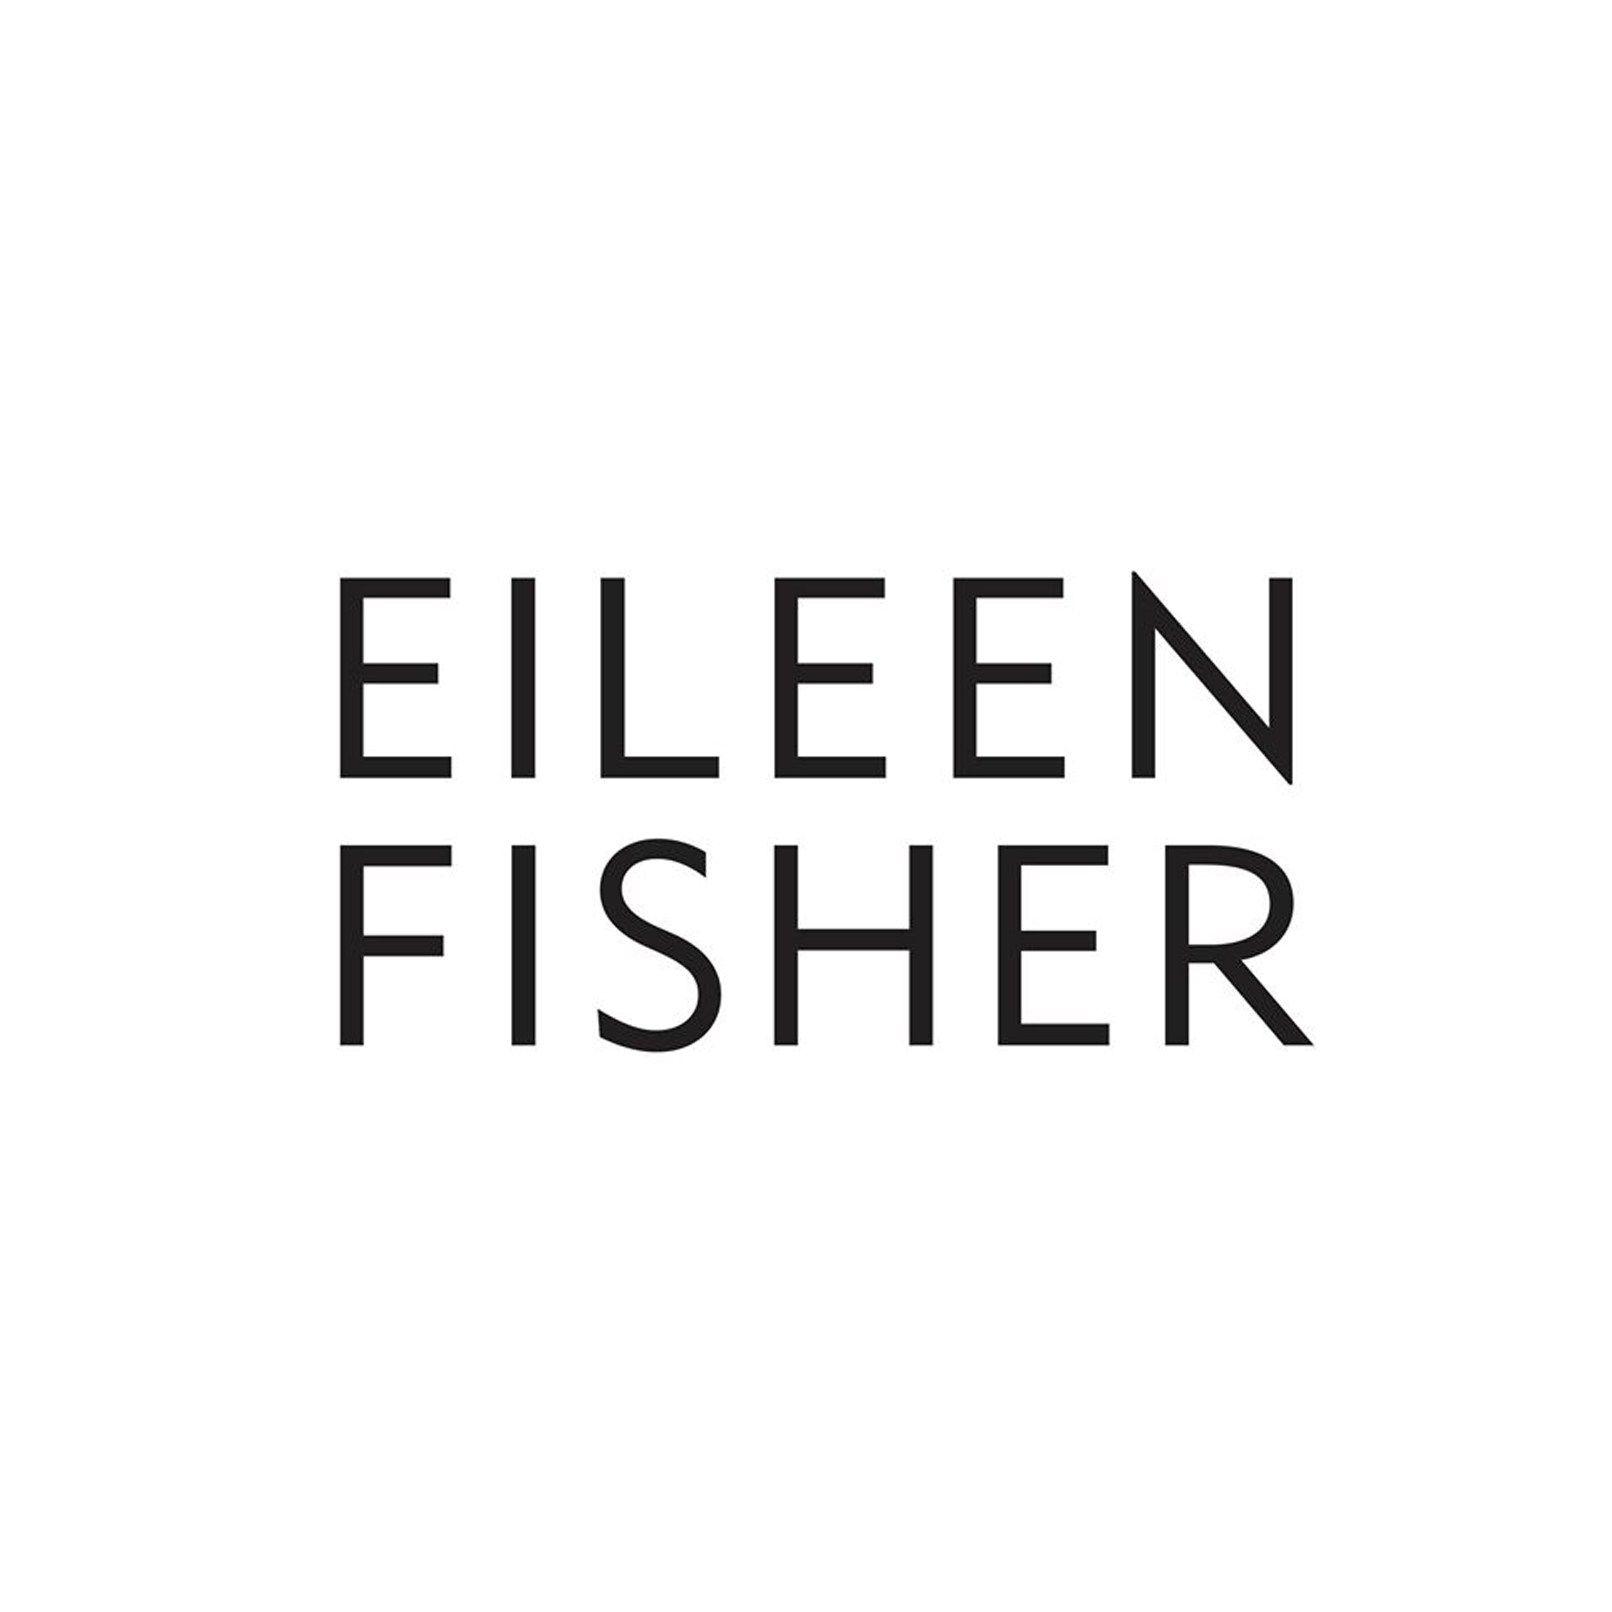 The Fisher Logo - EILEEN FISHER Logo - Verité